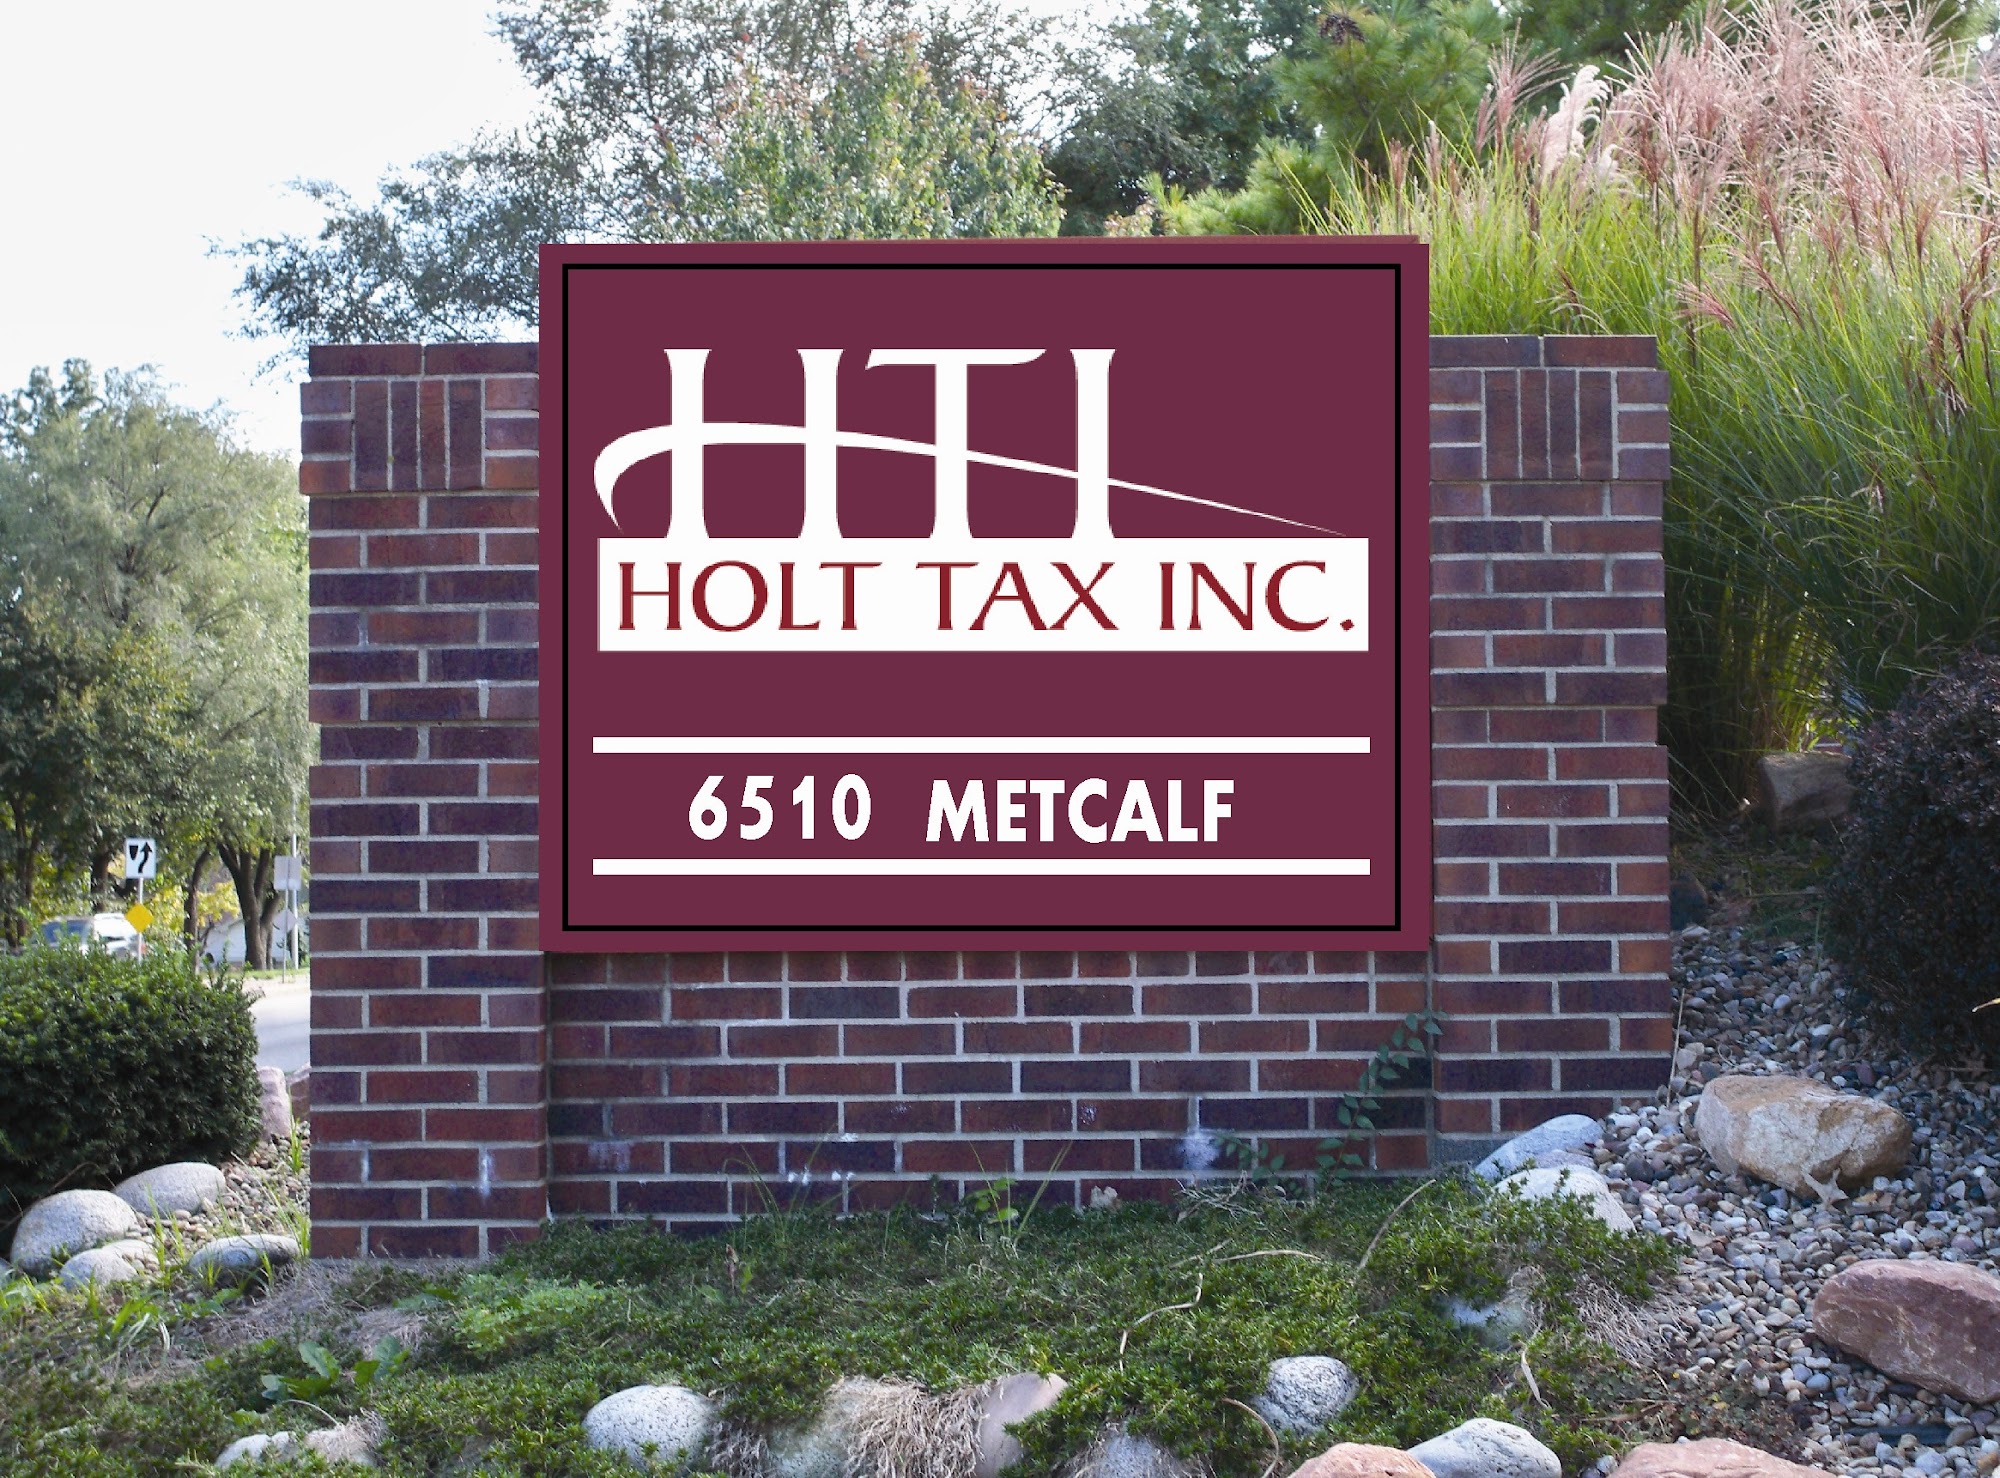 Holt's Tax Inc